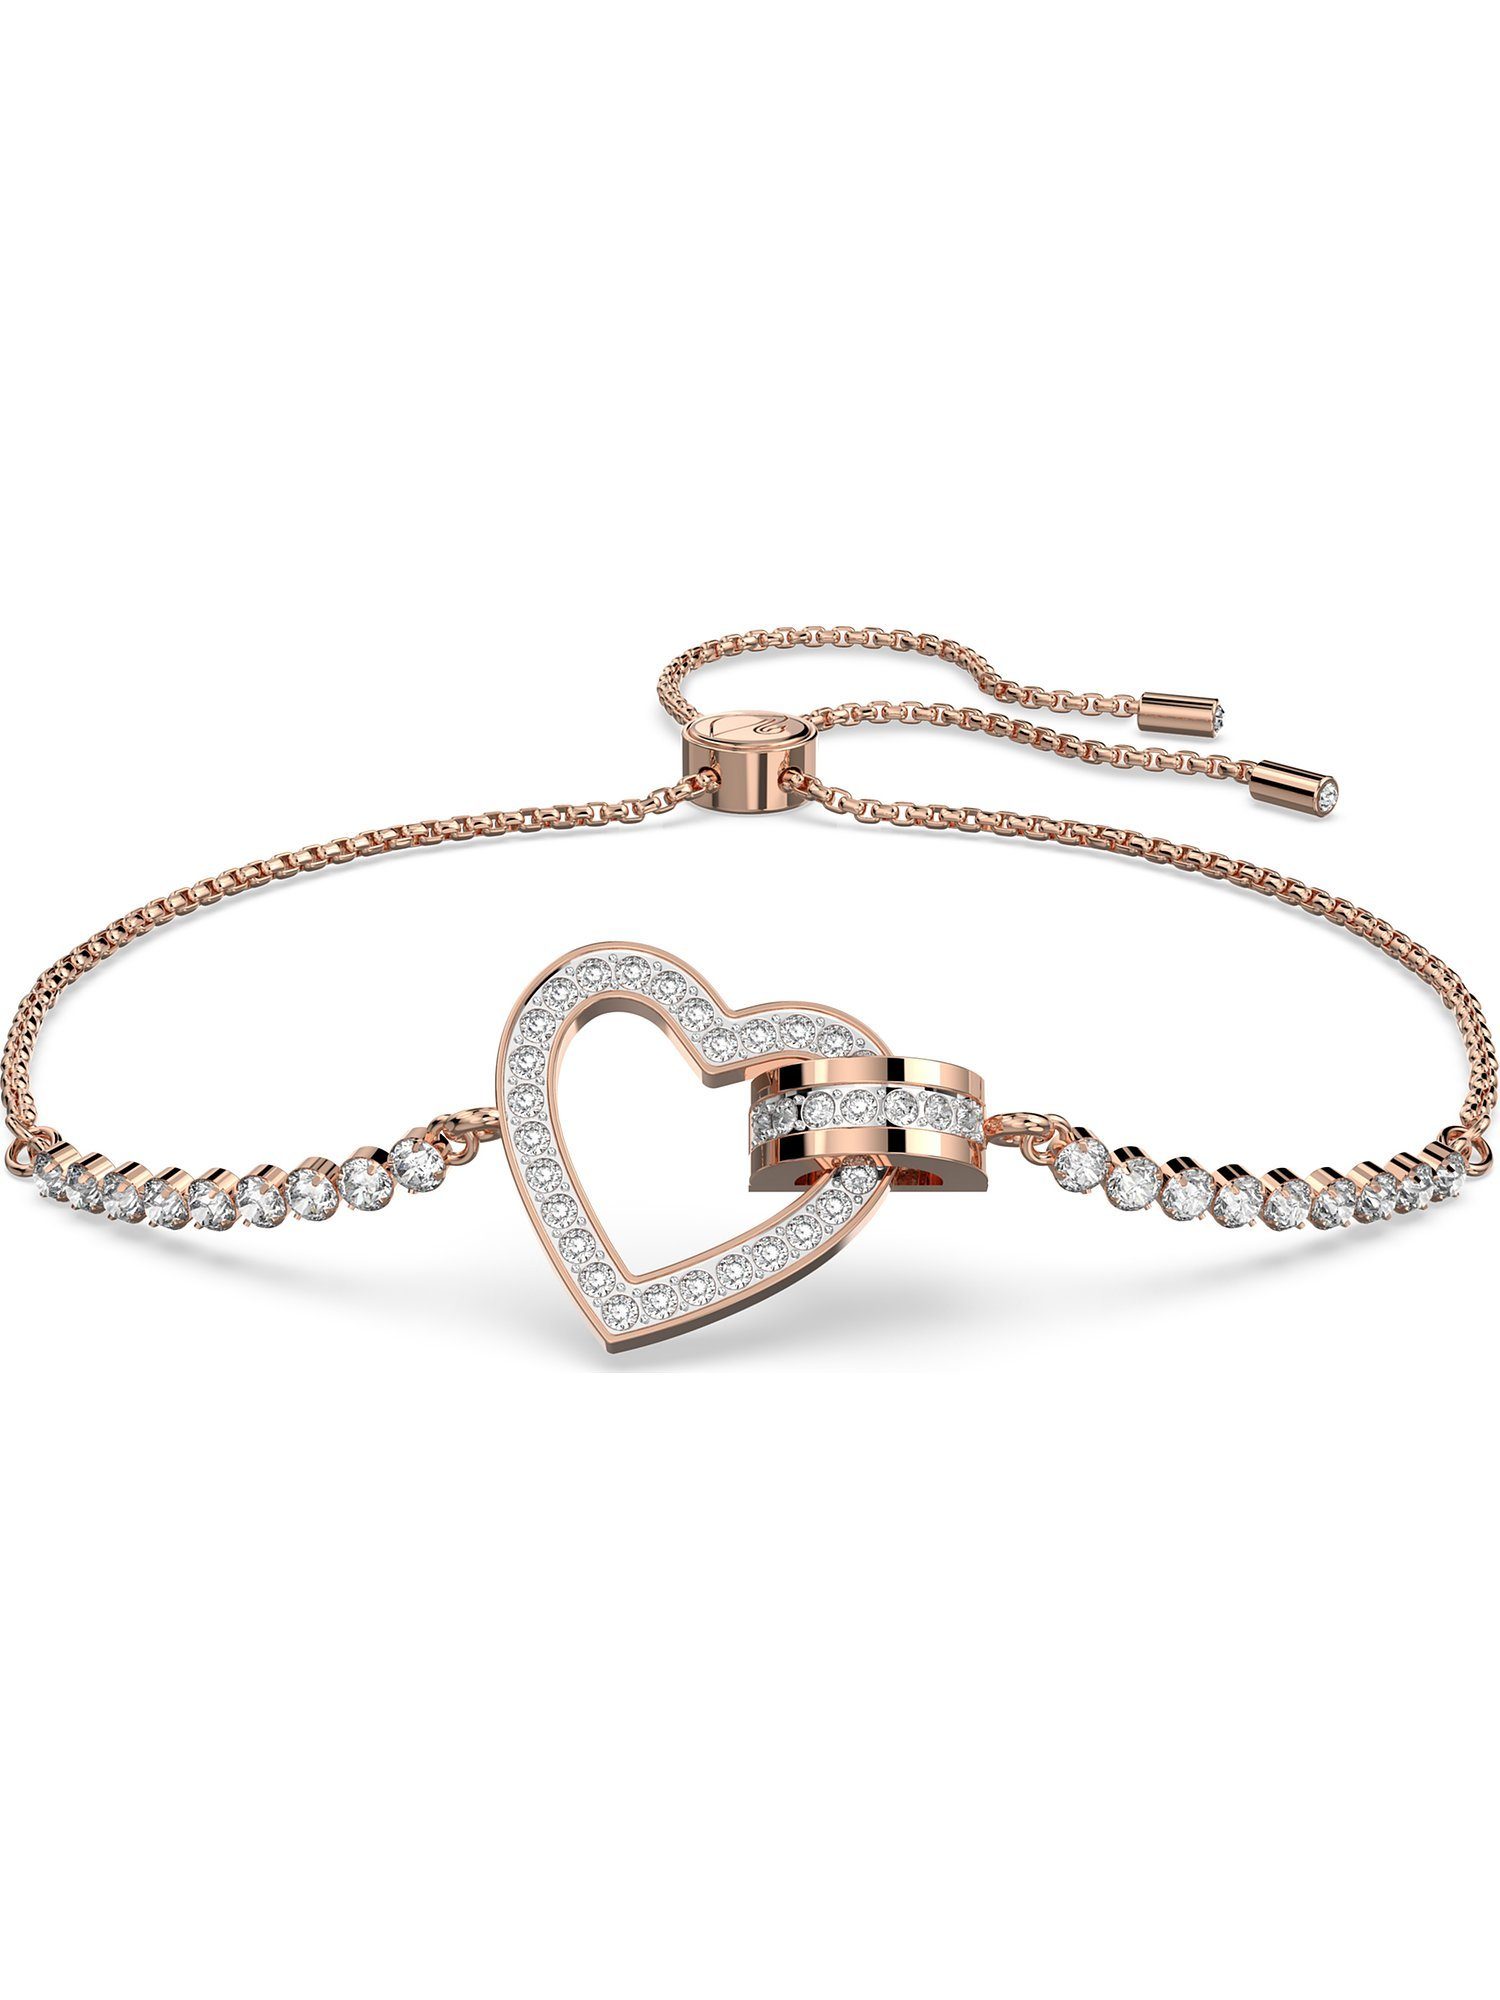 Swarovski Armband »Swarovski Damen-Armband Metall Swarovski-Kristall«,  trendig online kaufen | OTTO